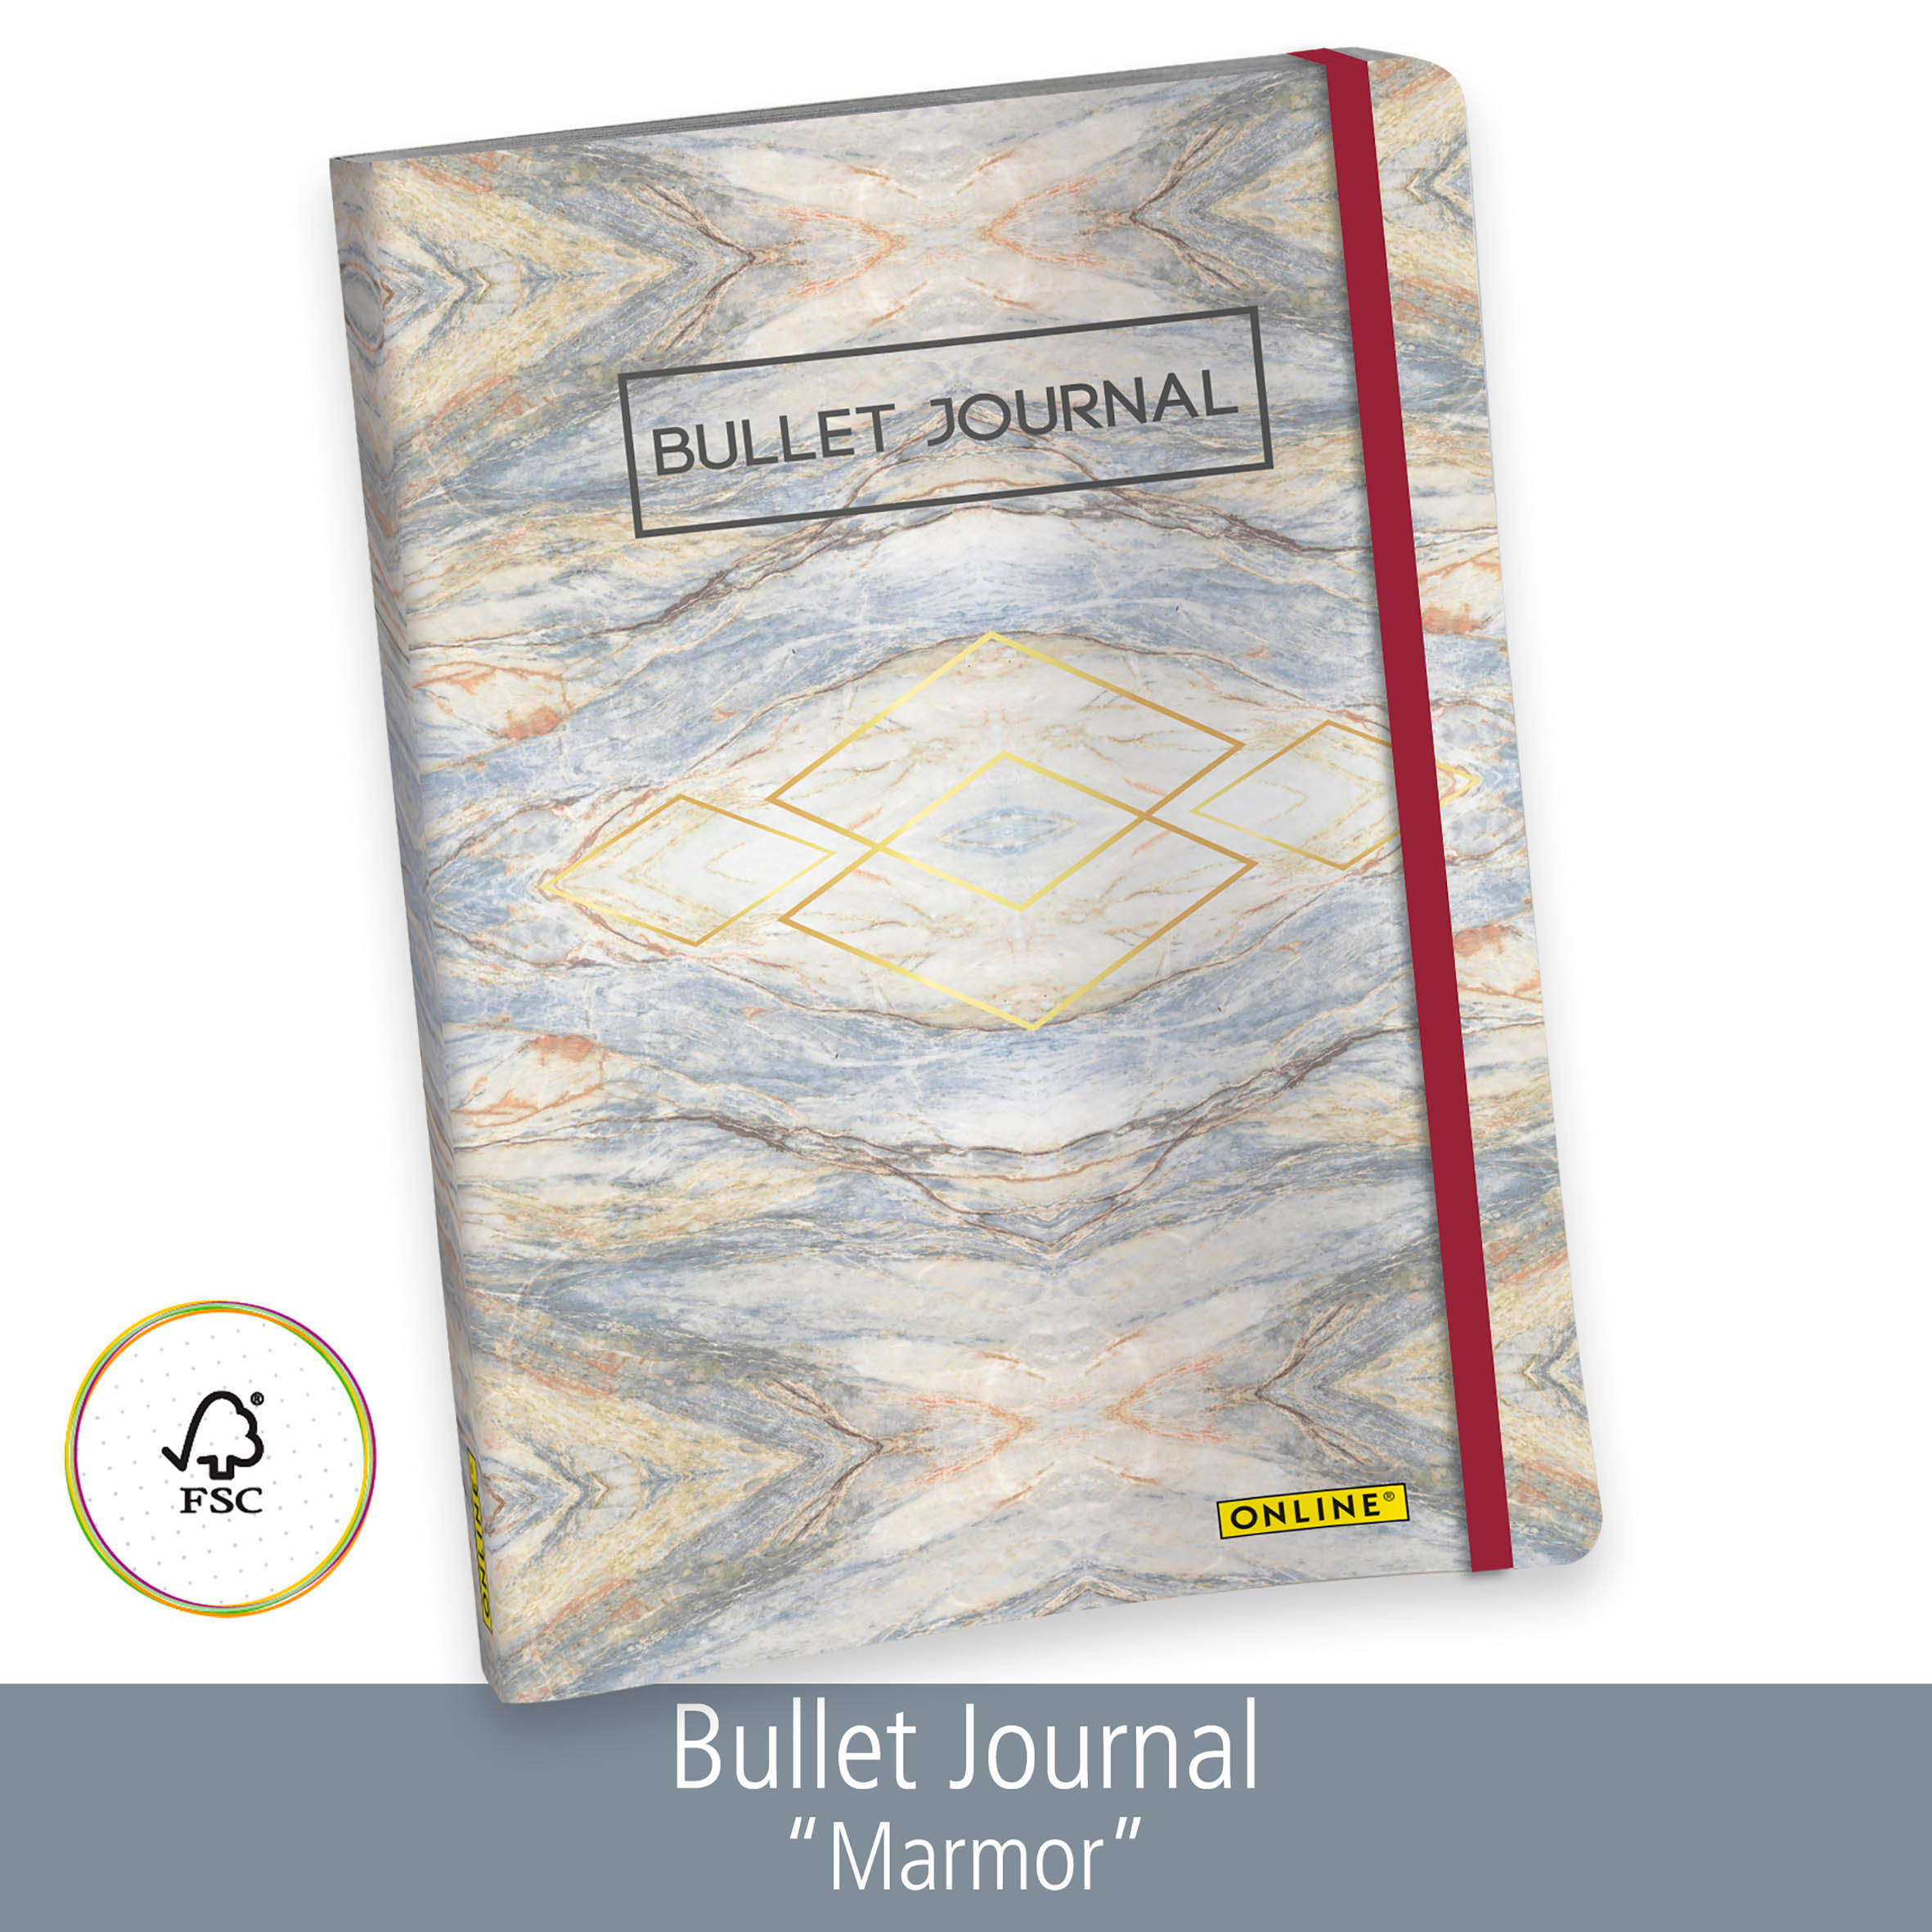 ONLINE Bullet Journal A5 02248 Marmor 96 flls. Marmor 96 flls.